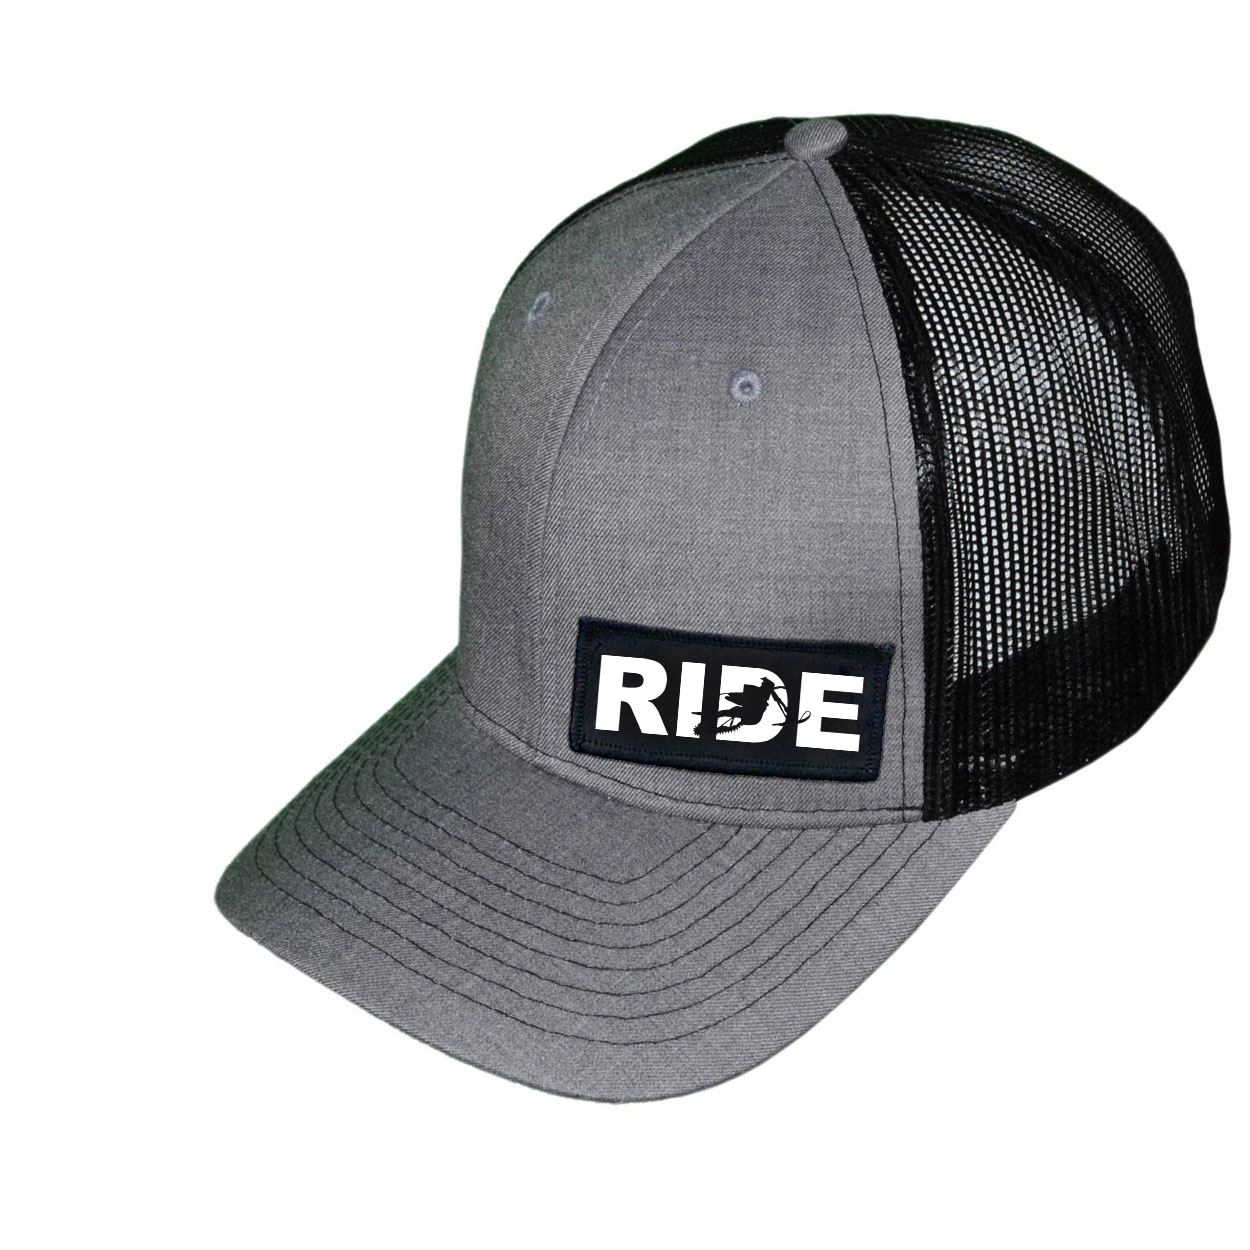 Ride Snowbike Logo Night Out Woven Patch Snapback Trucker Hat Heather Gray/Black (White Logo)